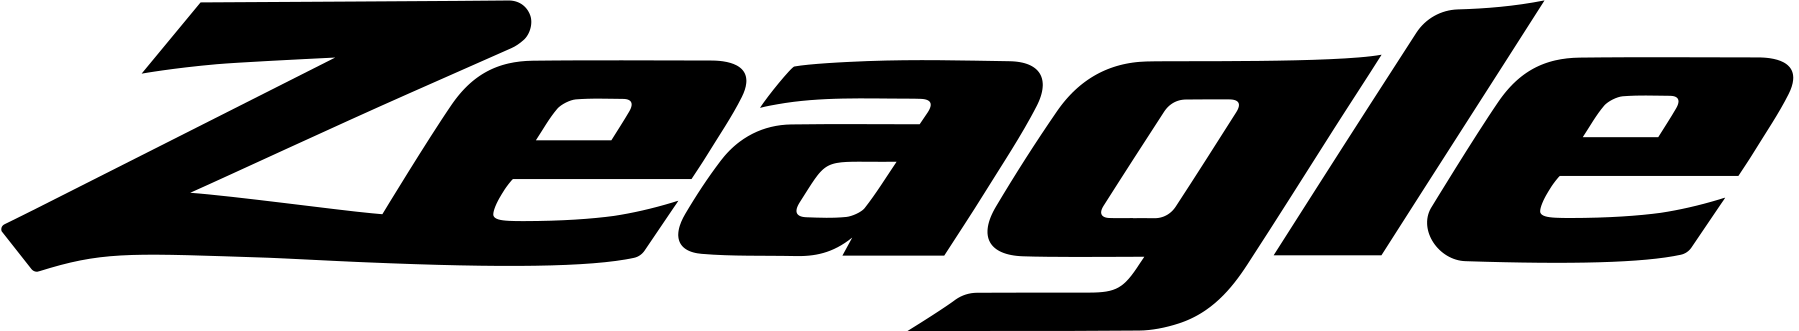 zeagle scuba gear logo